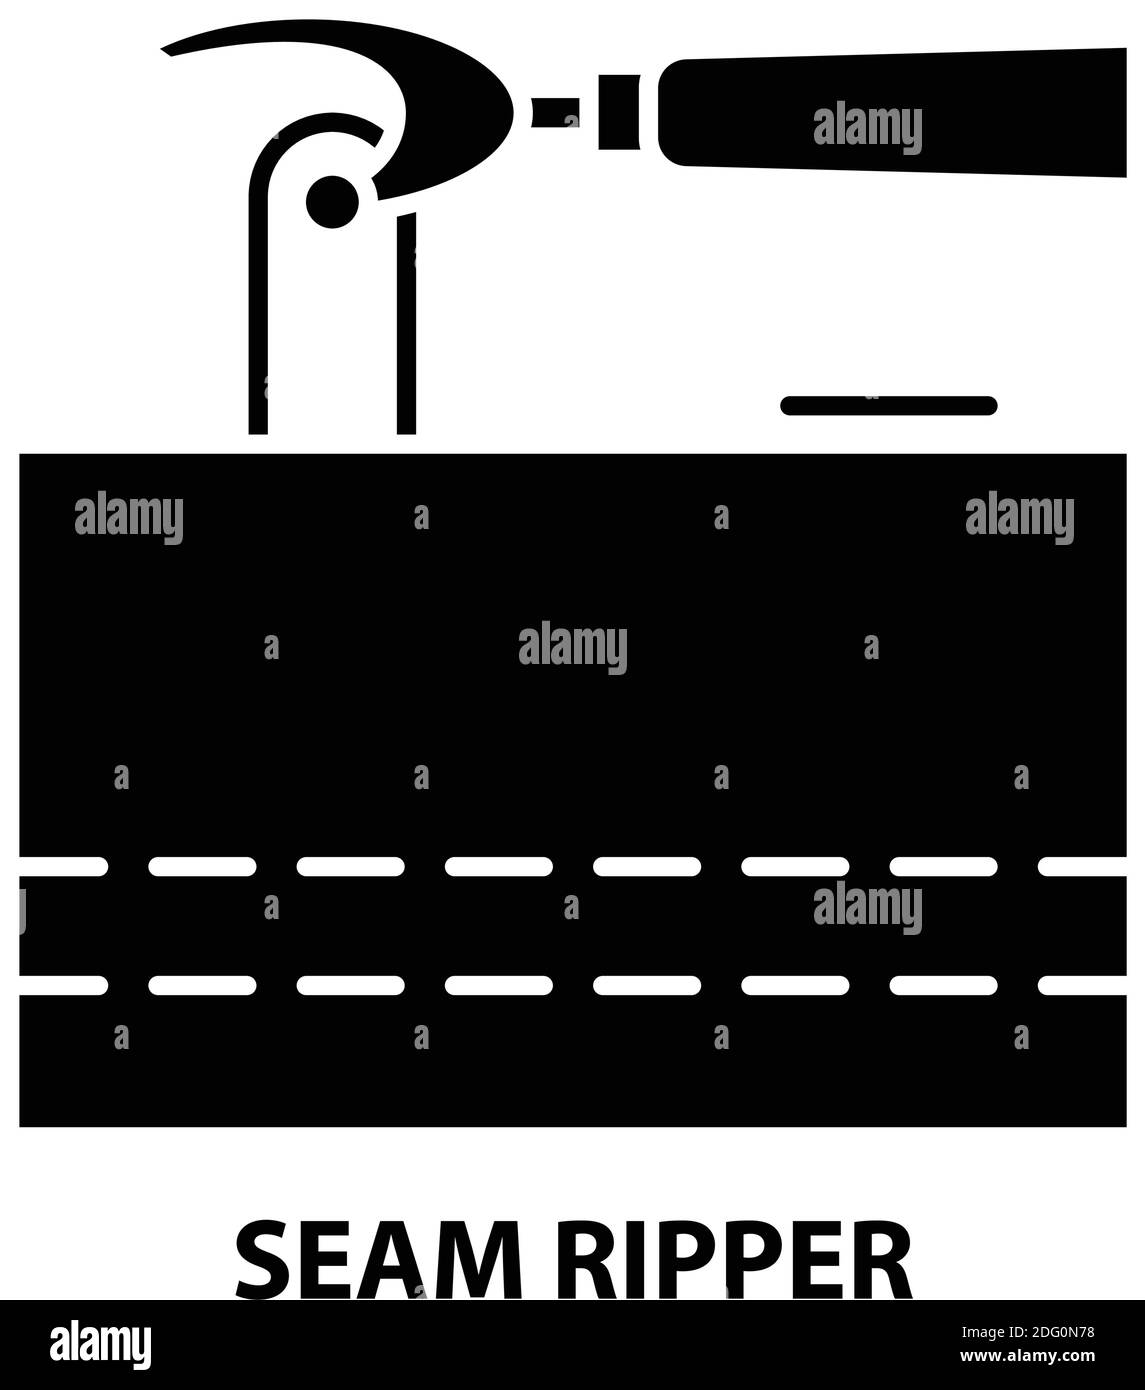 seam ripper icon, black vector sign with editable strokes, concept illustration Stock Vector